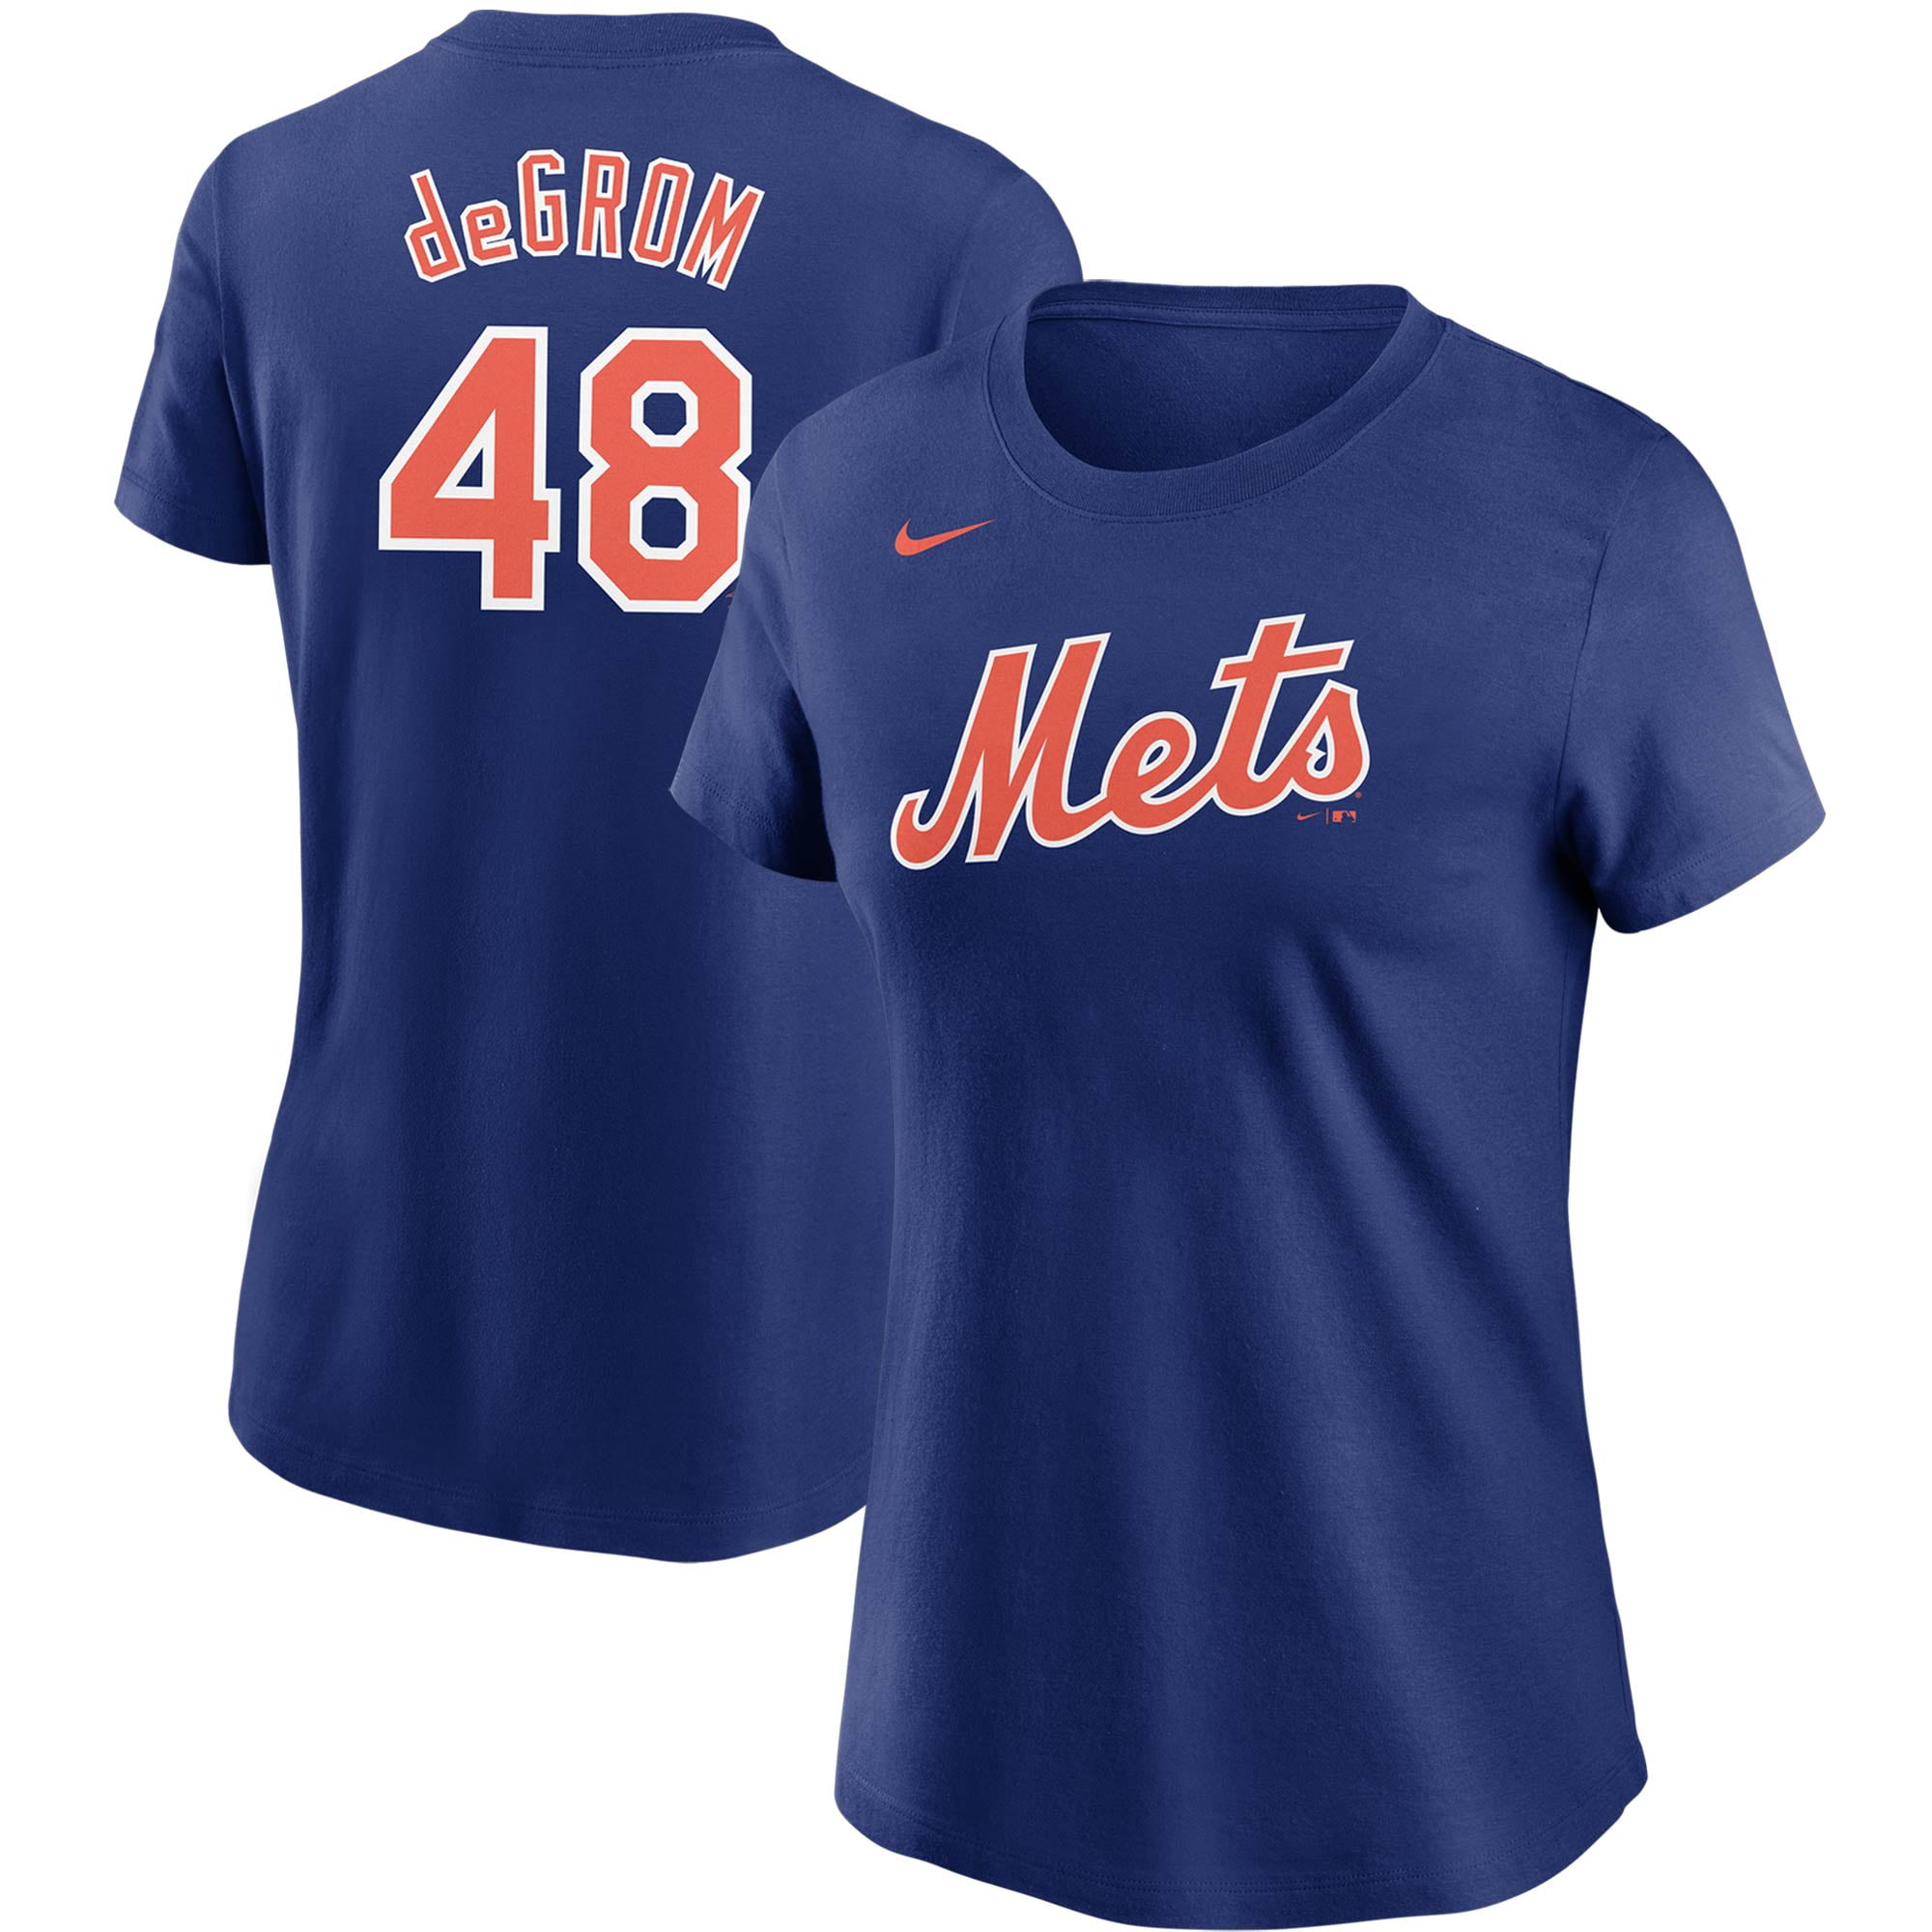 Mets Shirt New York Mets Jacob deGrom Shirt